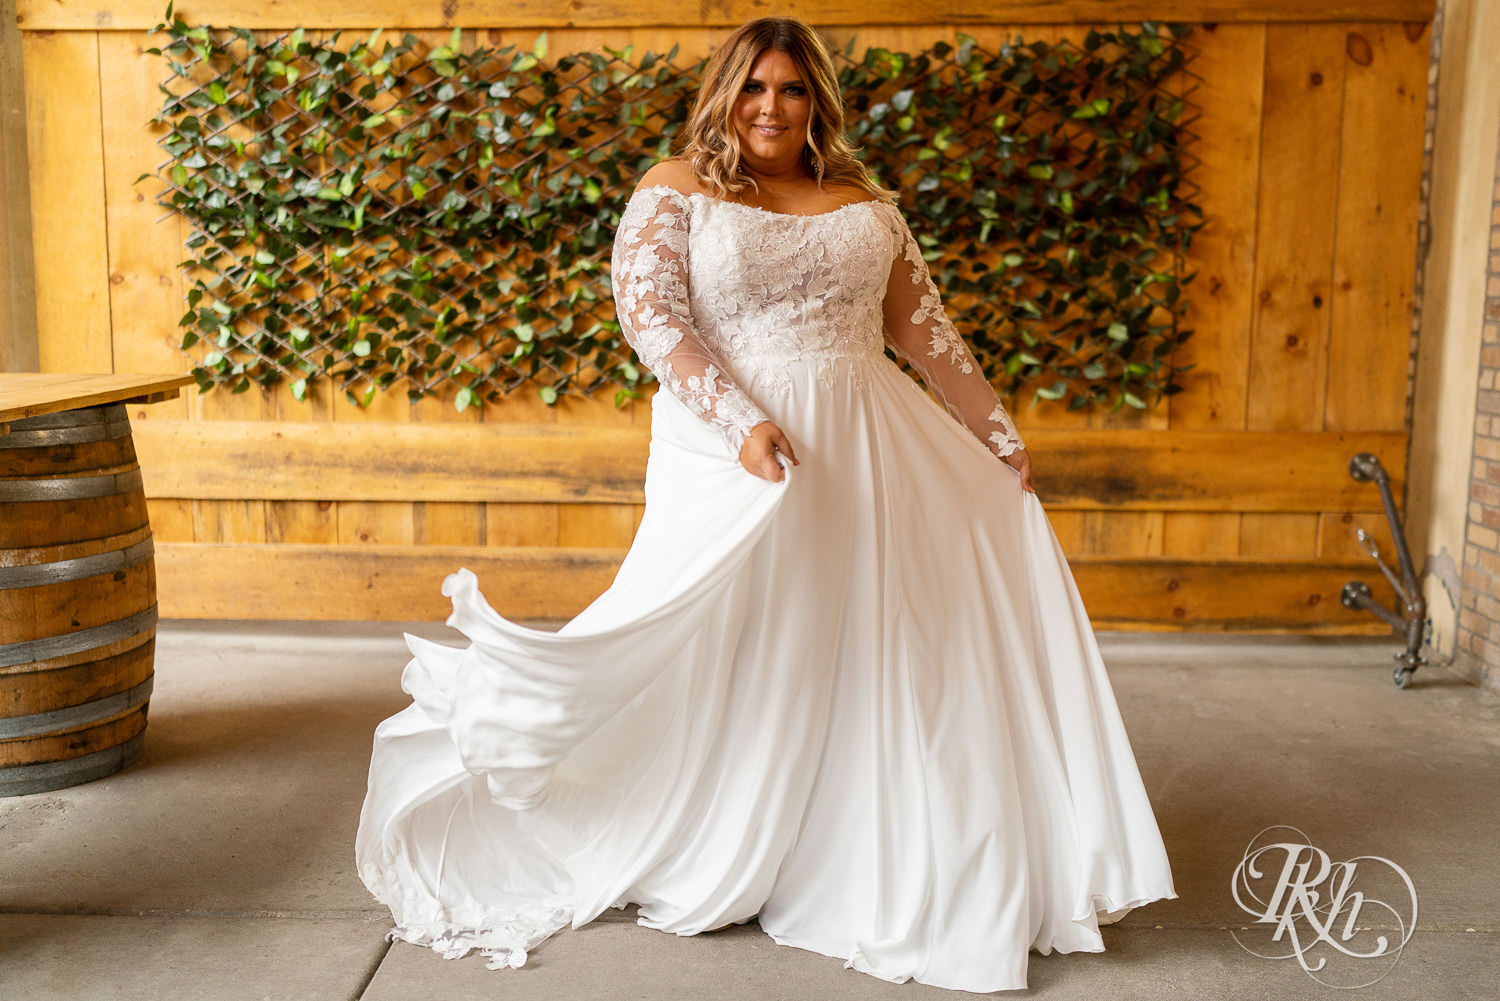 Plus size bride smiling in wedding dresses in Minneapolis, Minnesota.